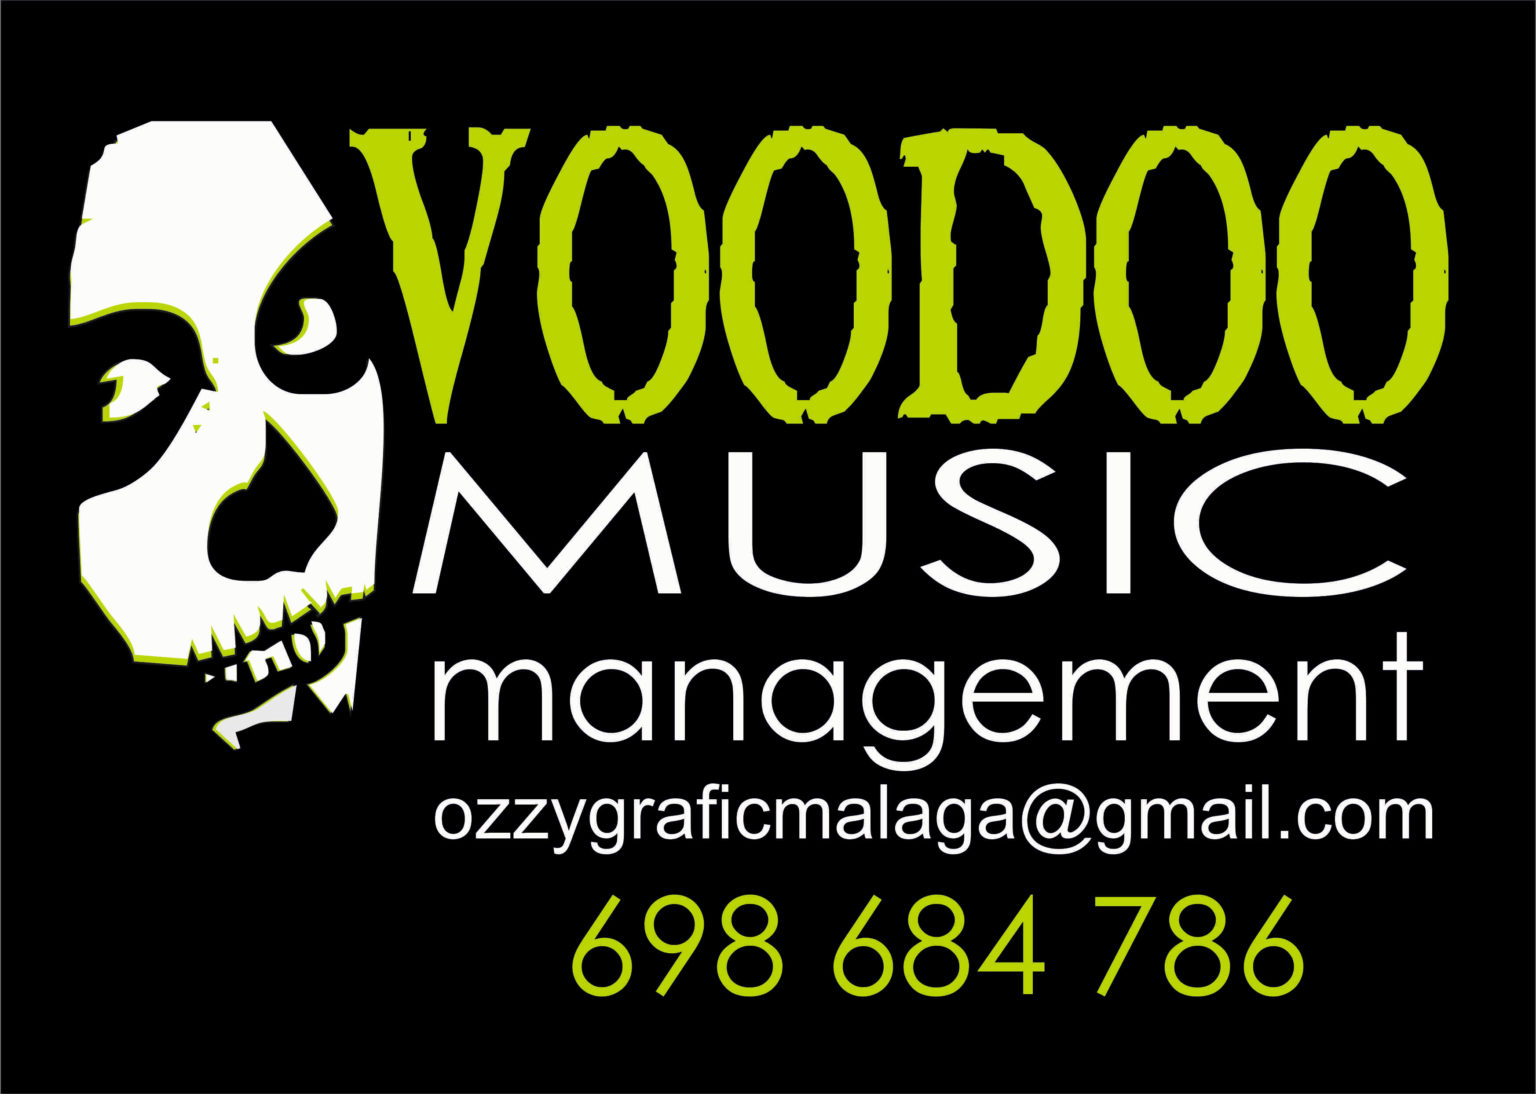 Voodoo Music management